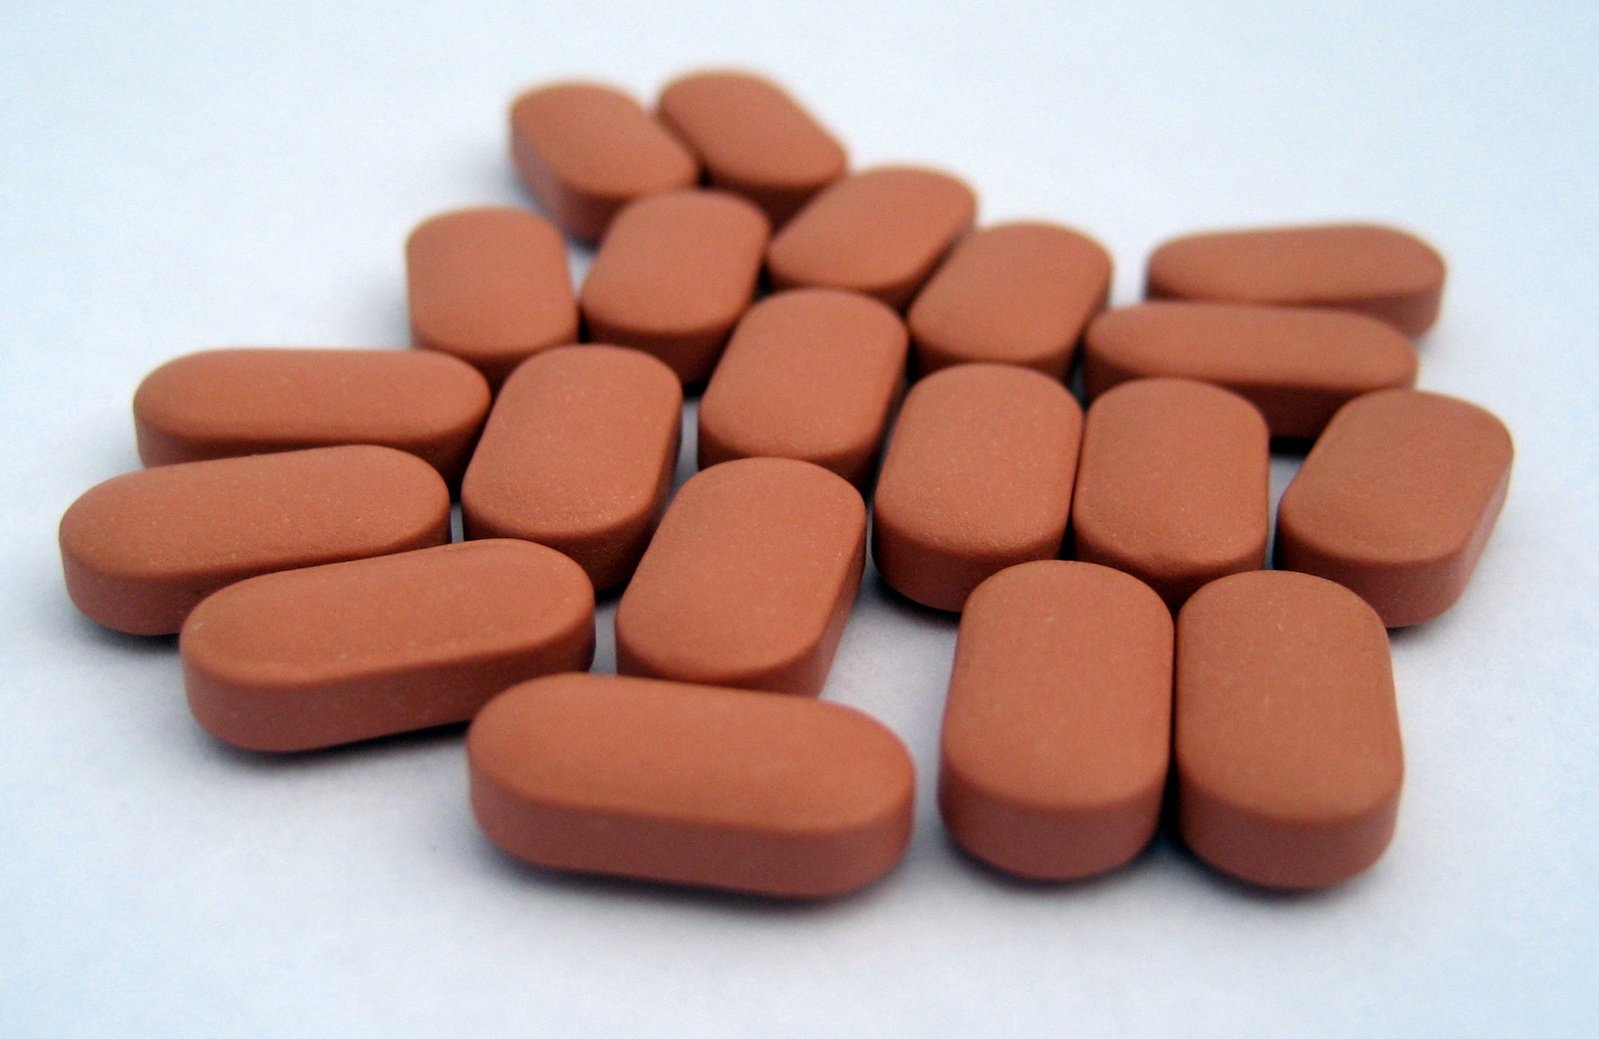 a pile of pill shaped orange pills